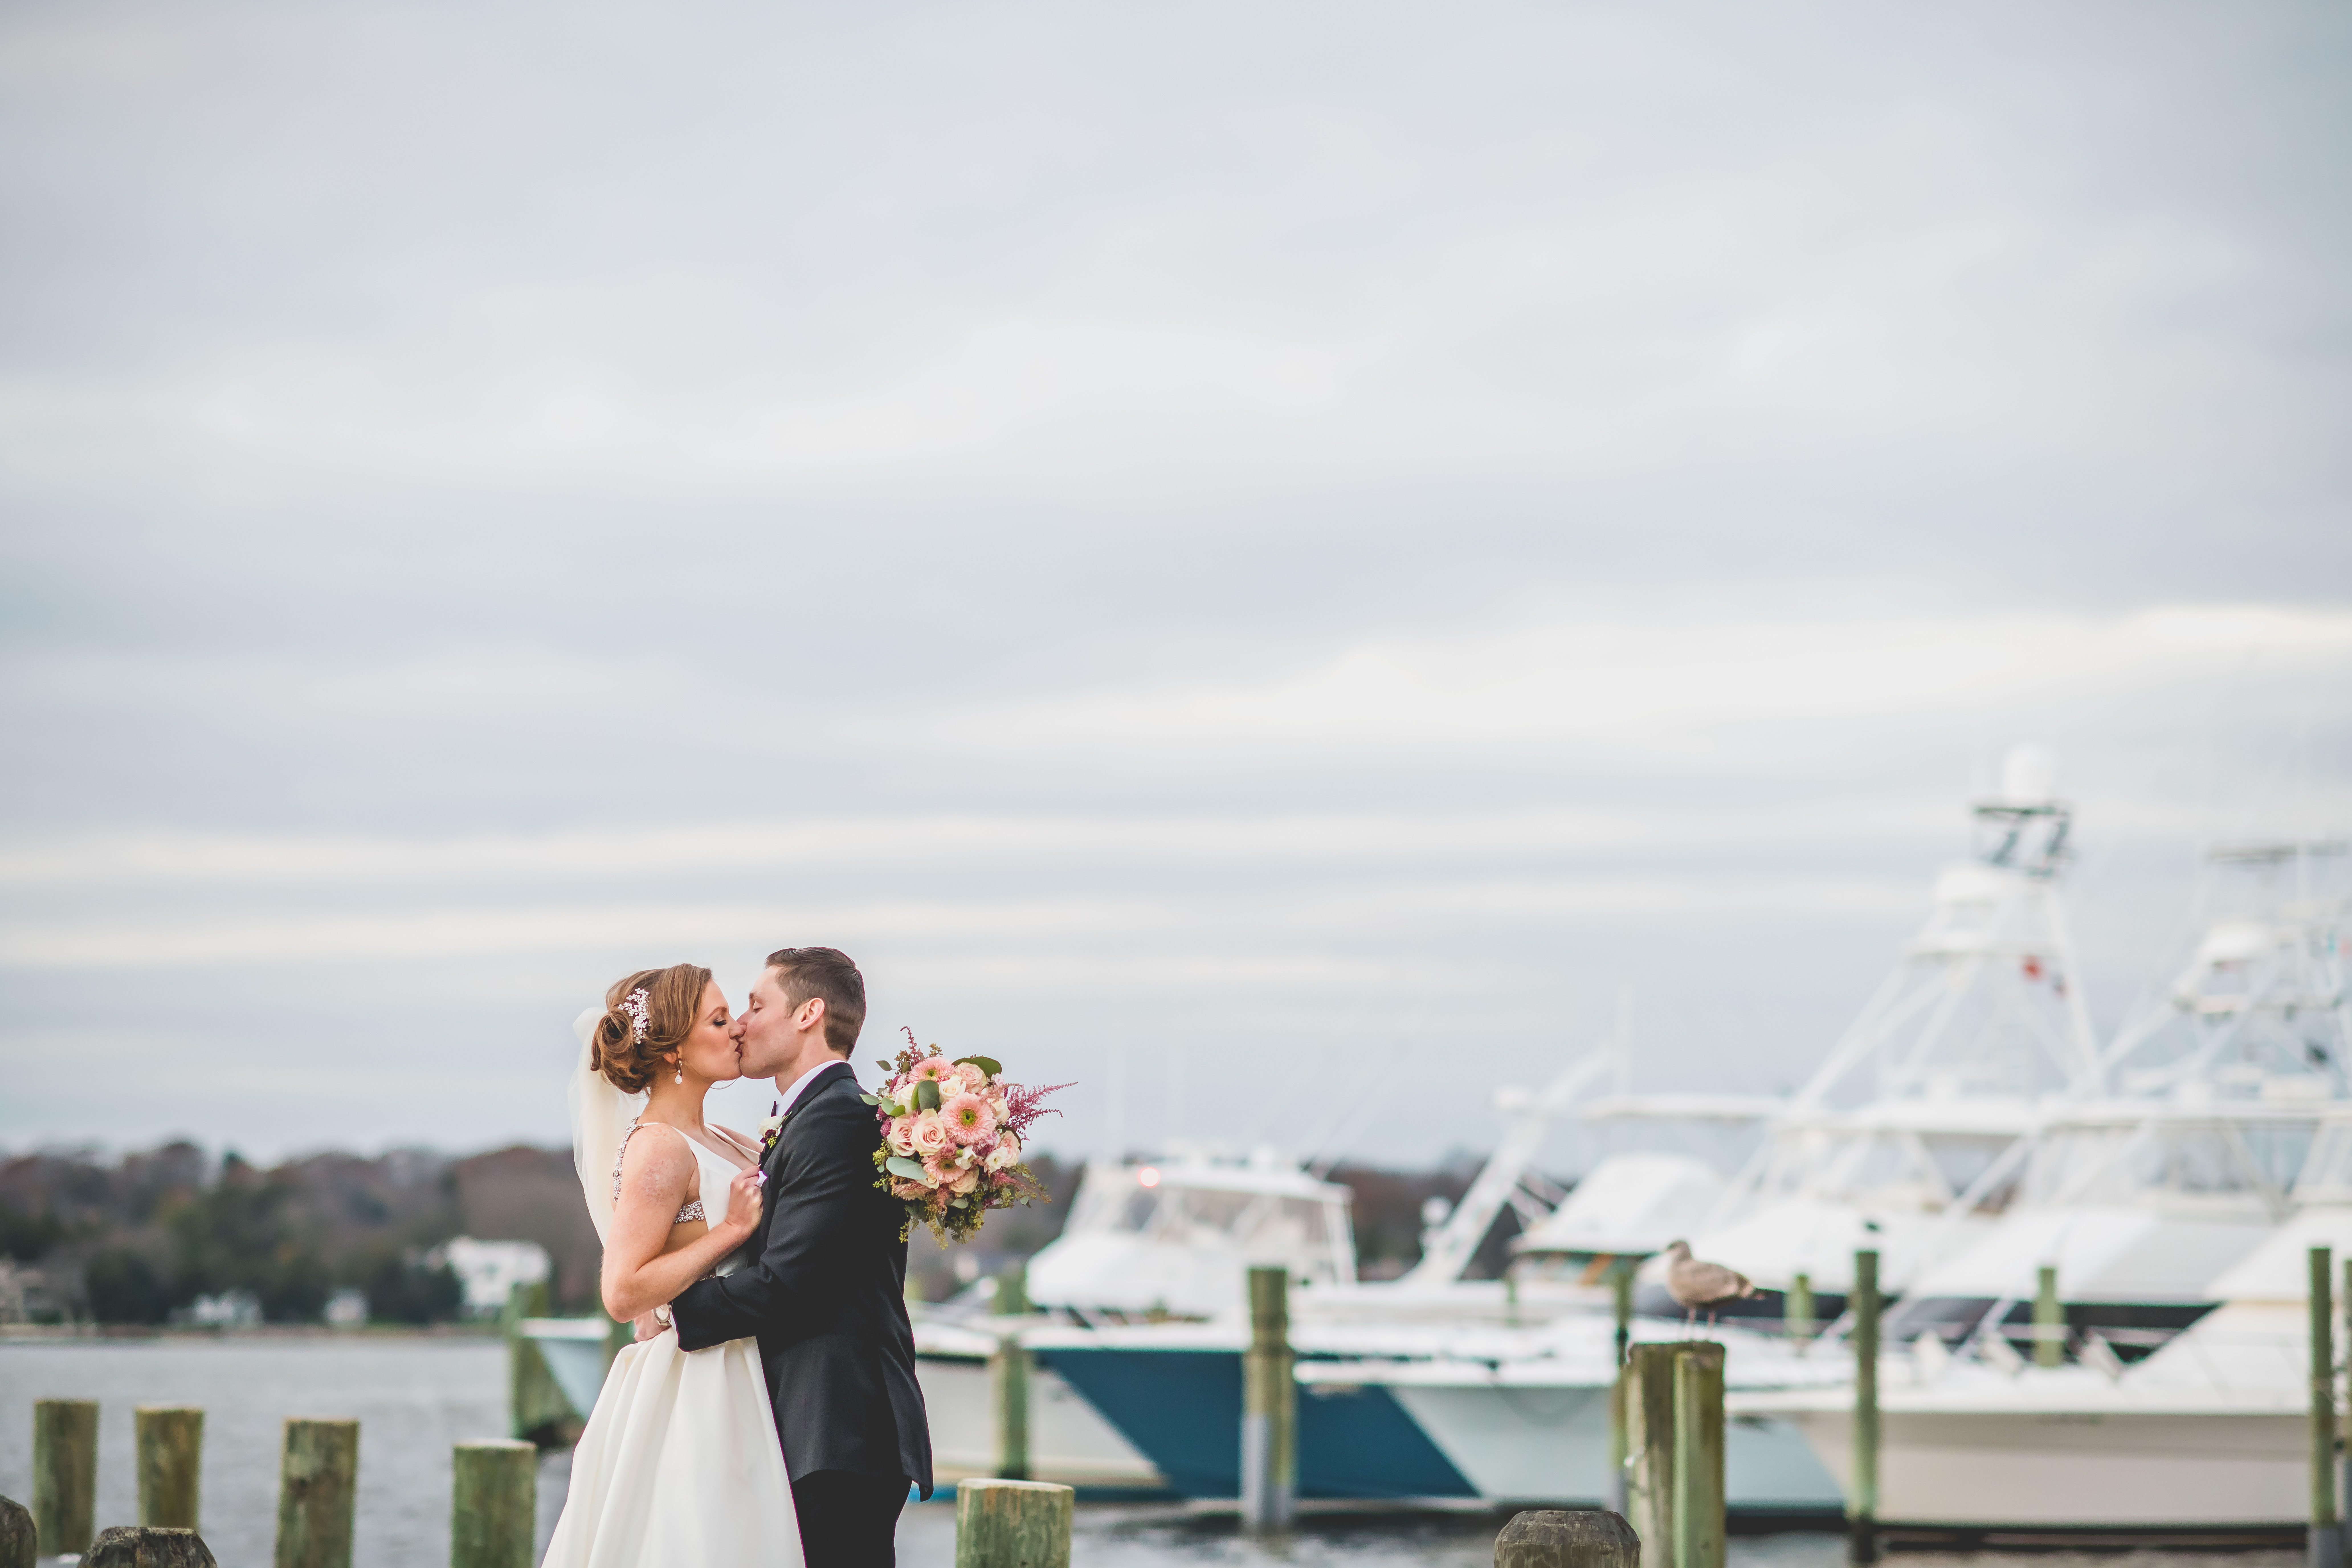 Bride and groom at Clarks Landing Yacht Club wedding in NJ.